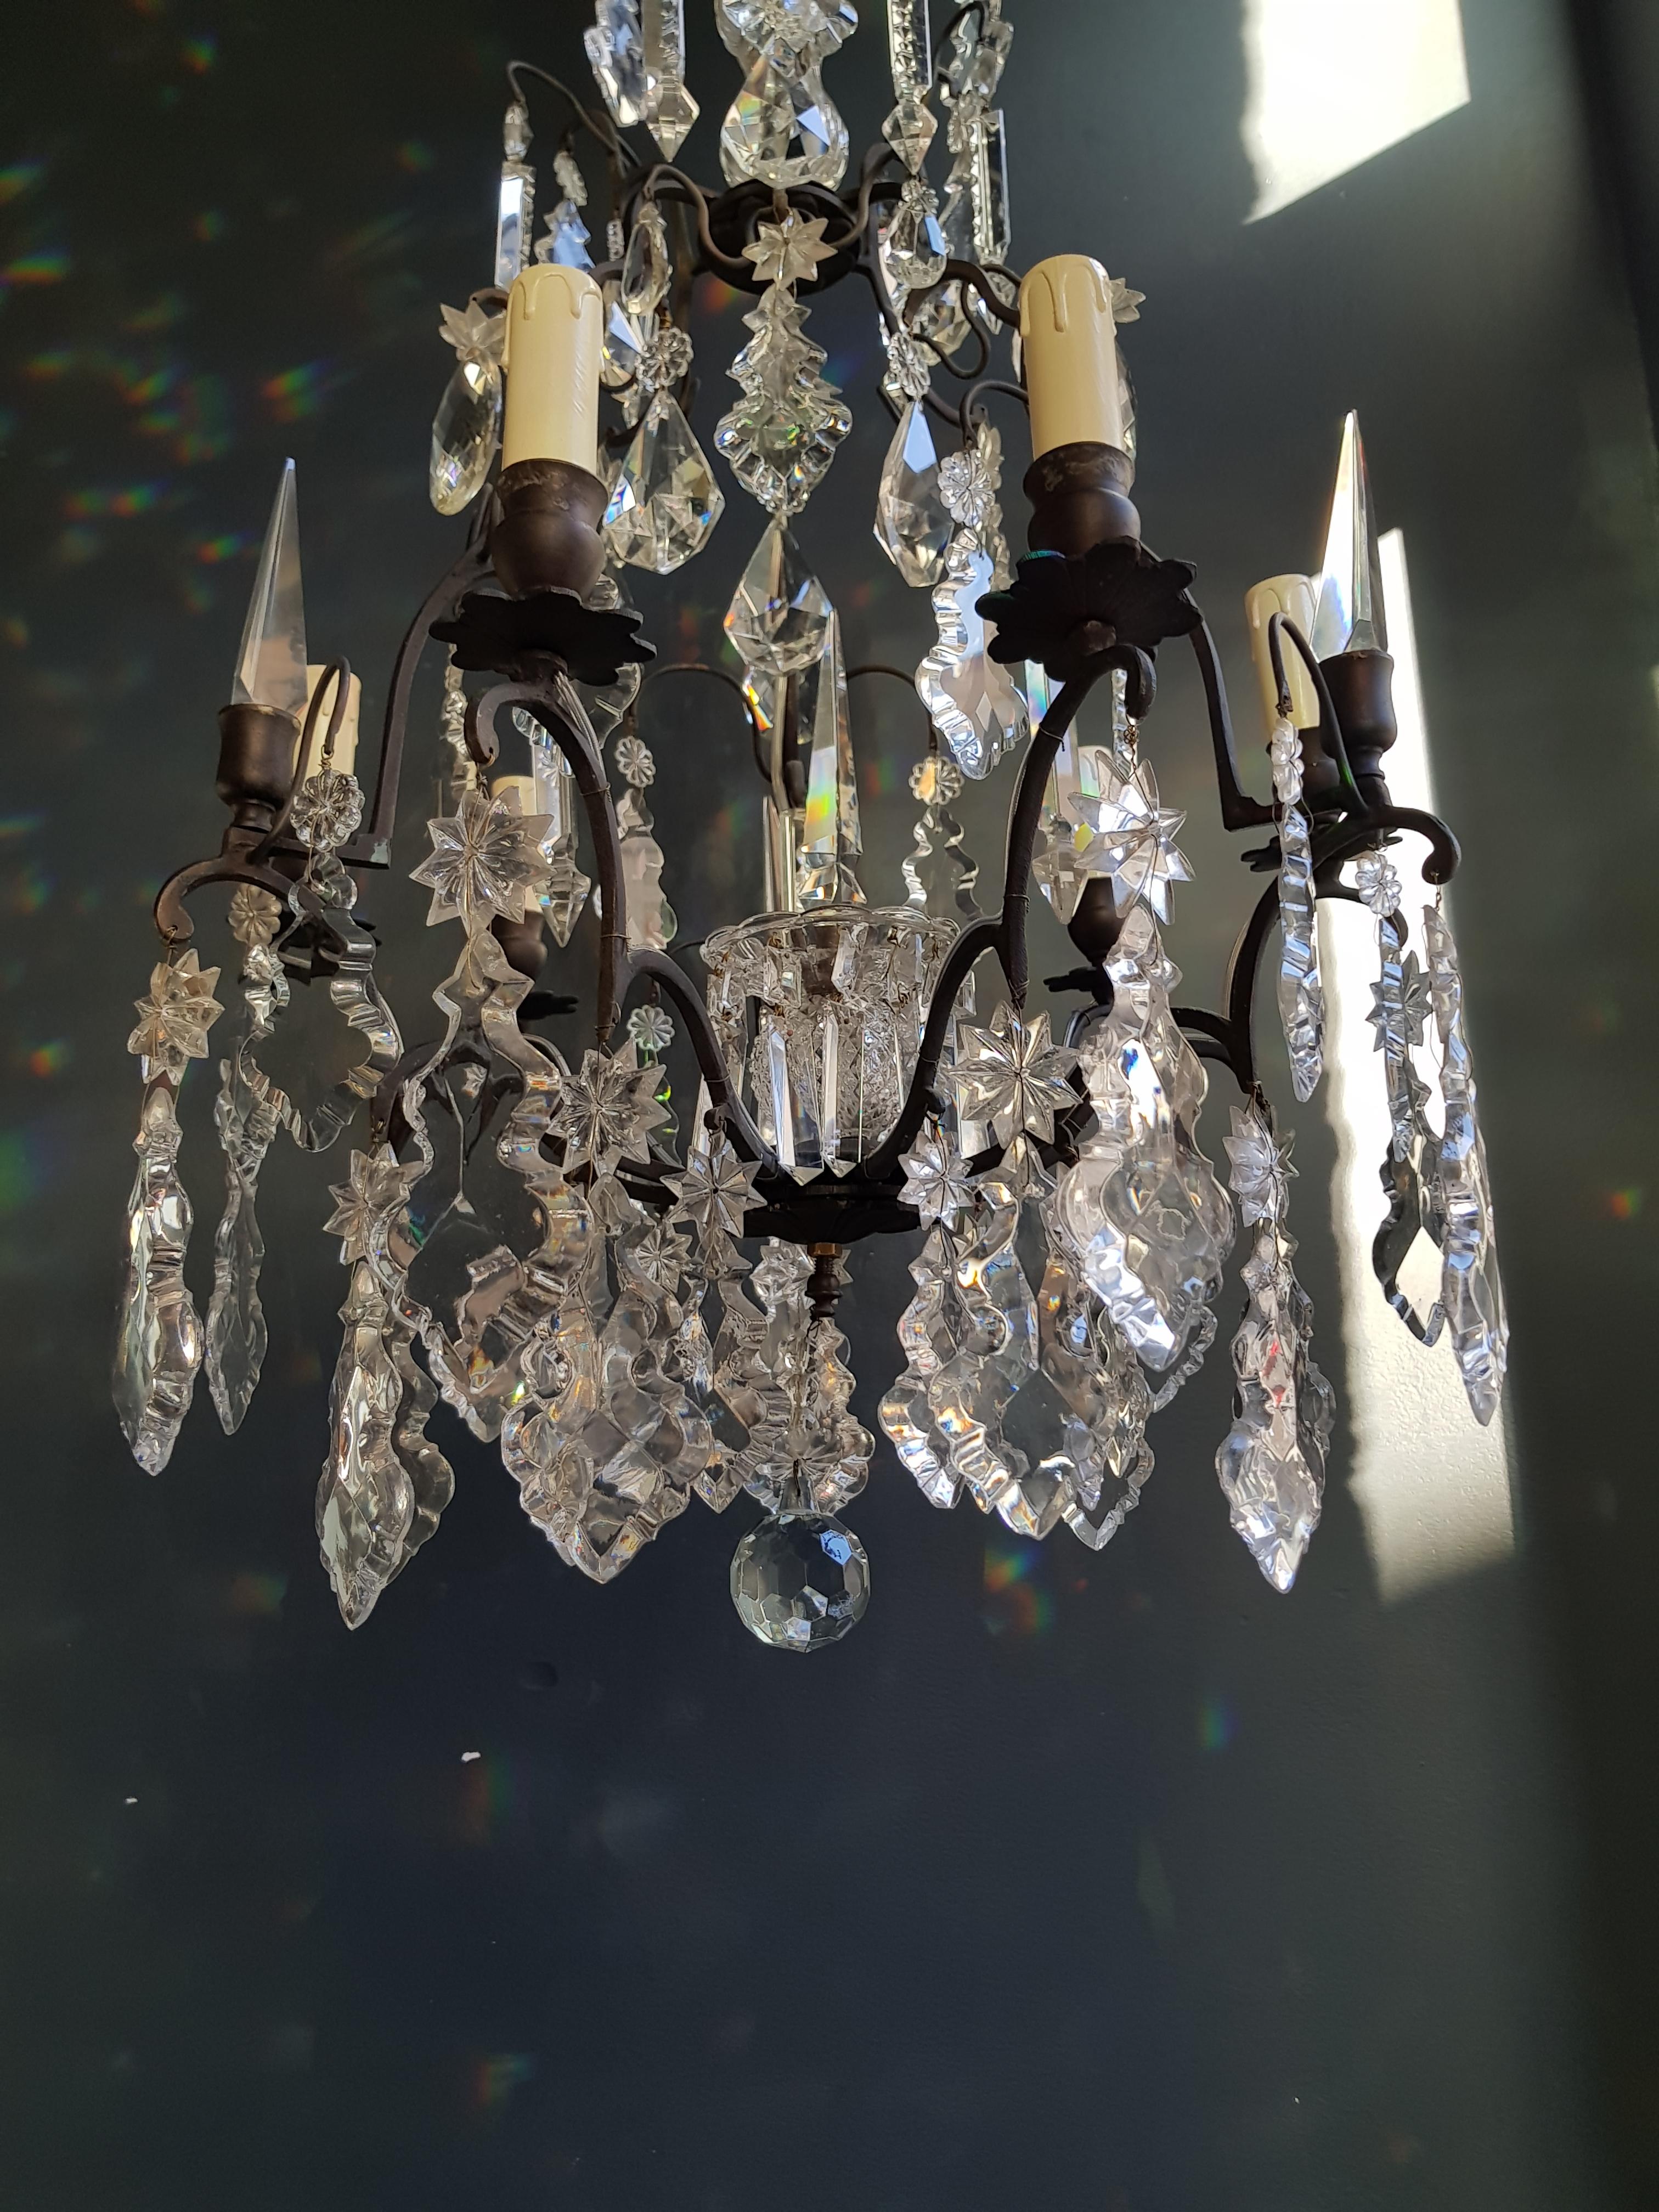 Mid-20th Century French Crystal Chandelier Antique Ceiling Lamp Lustre Art Nouveau Lamp